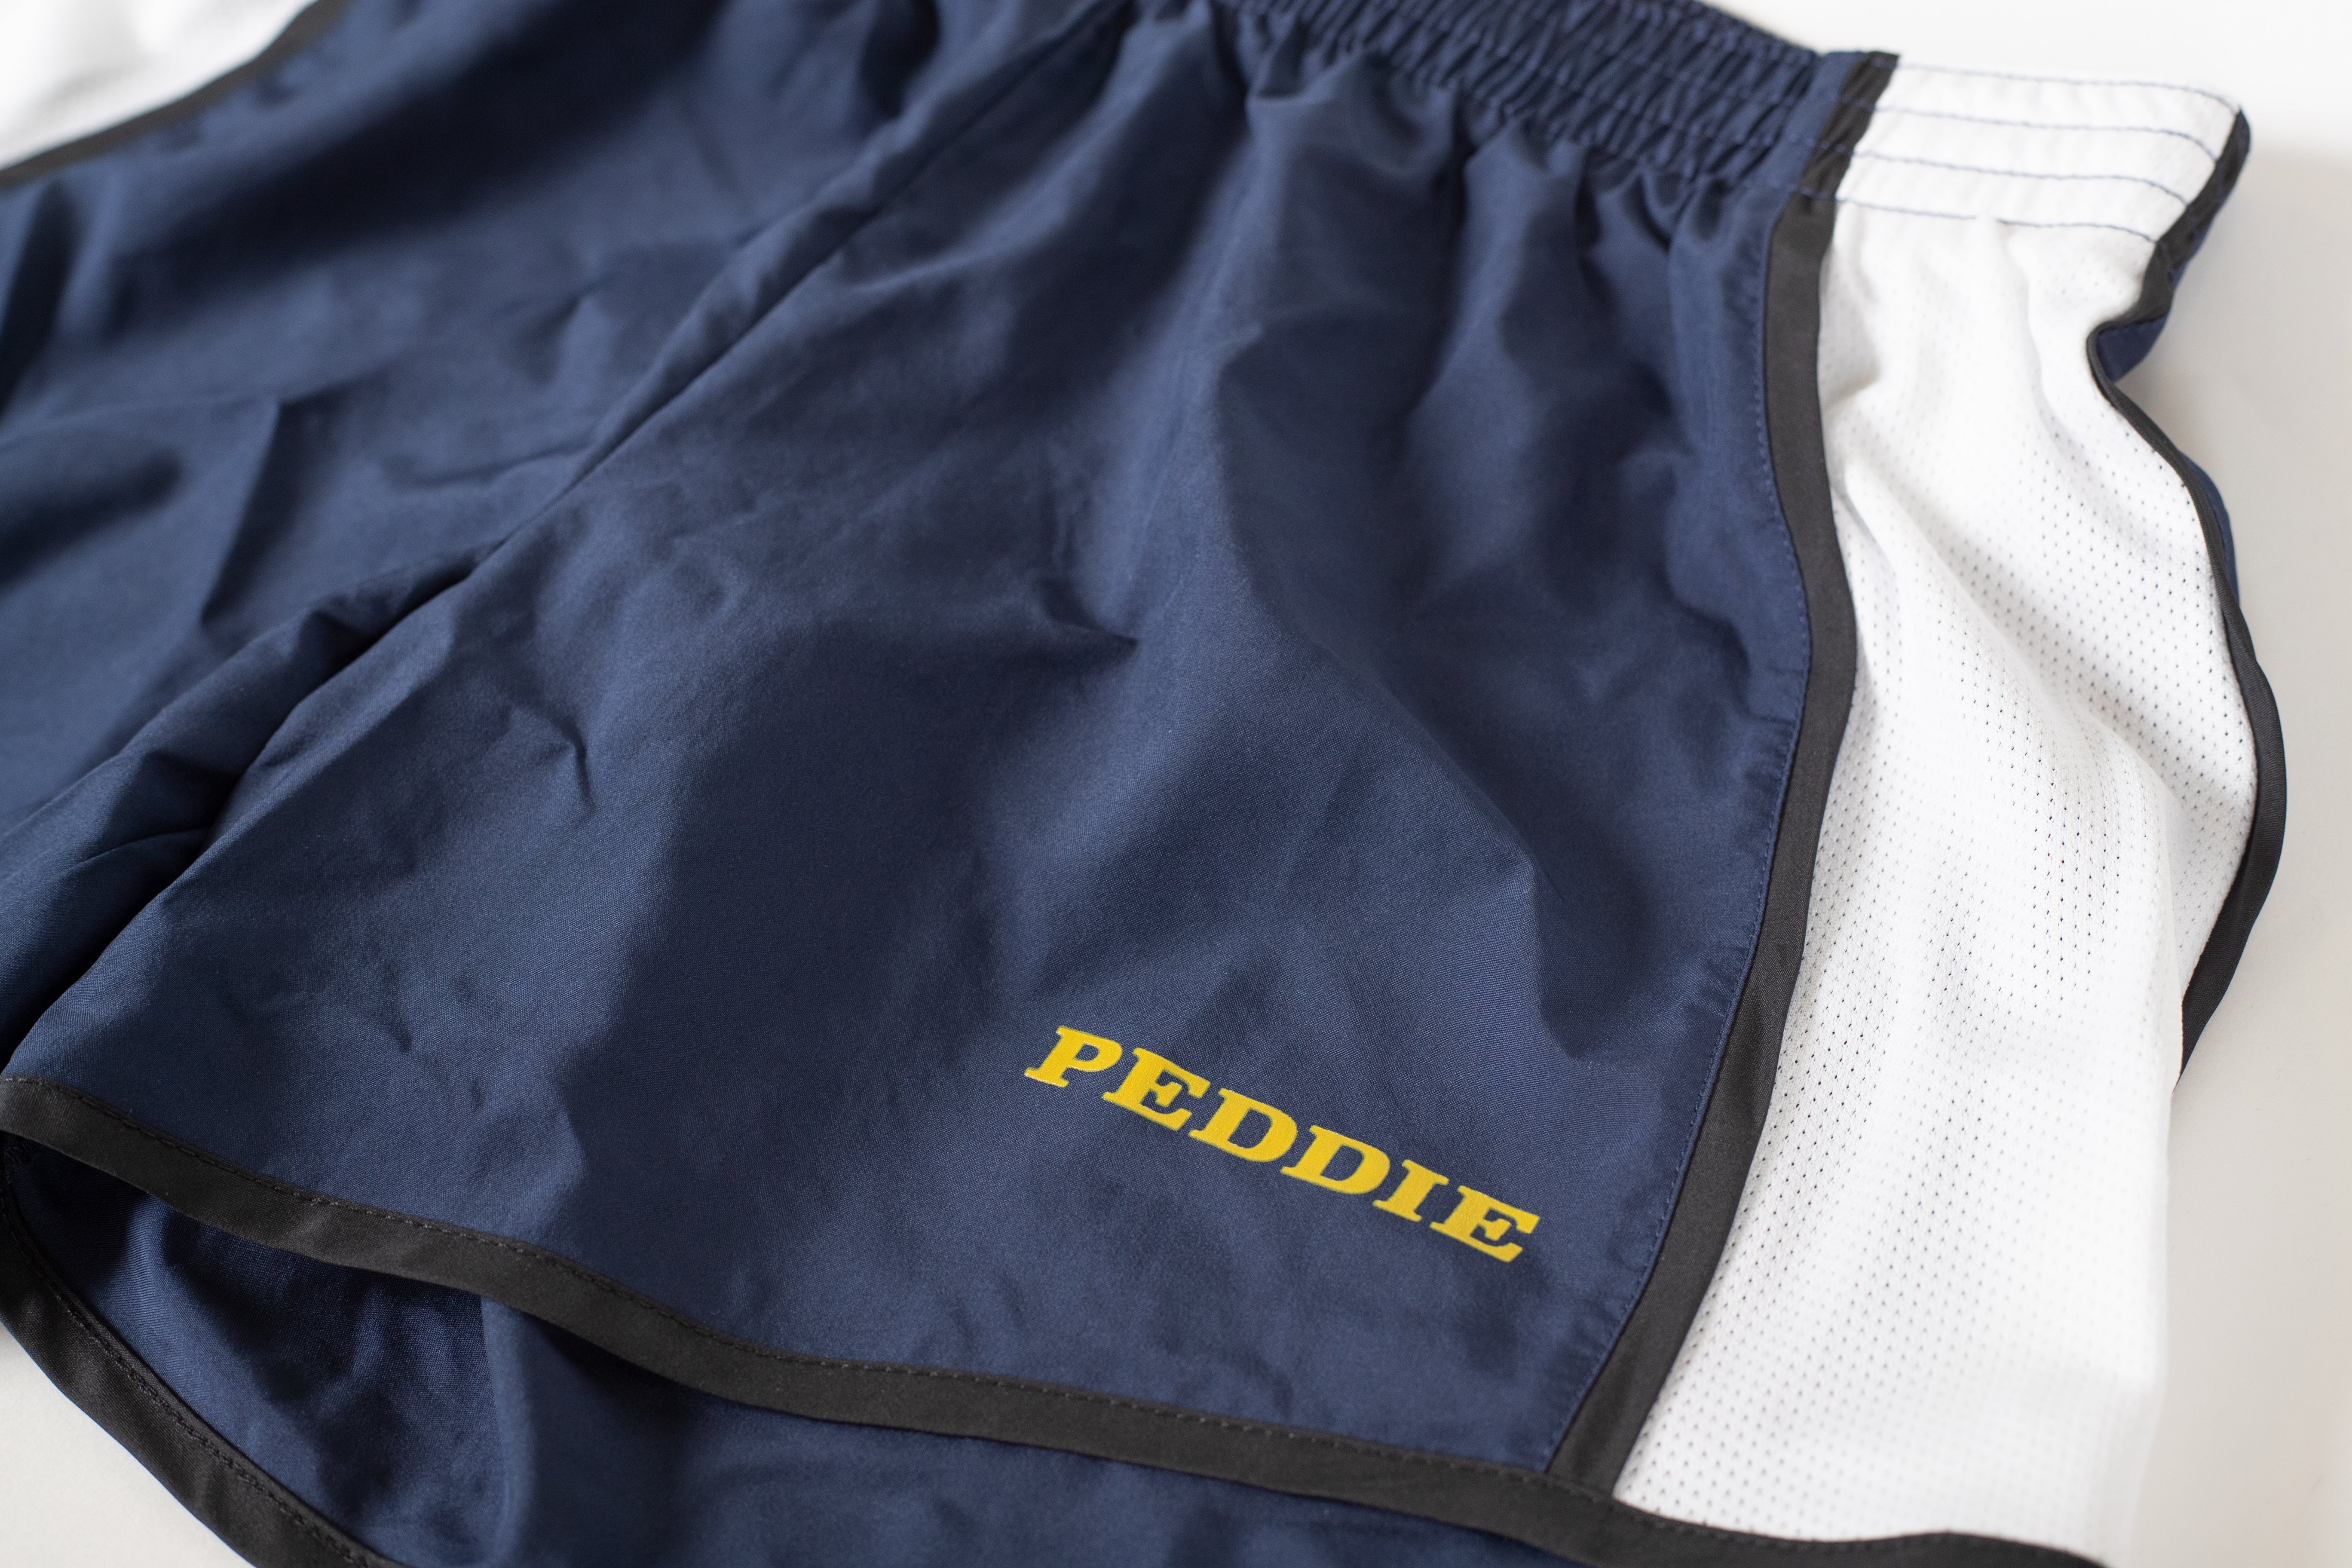 Peddie Women's Colorblock Shorts